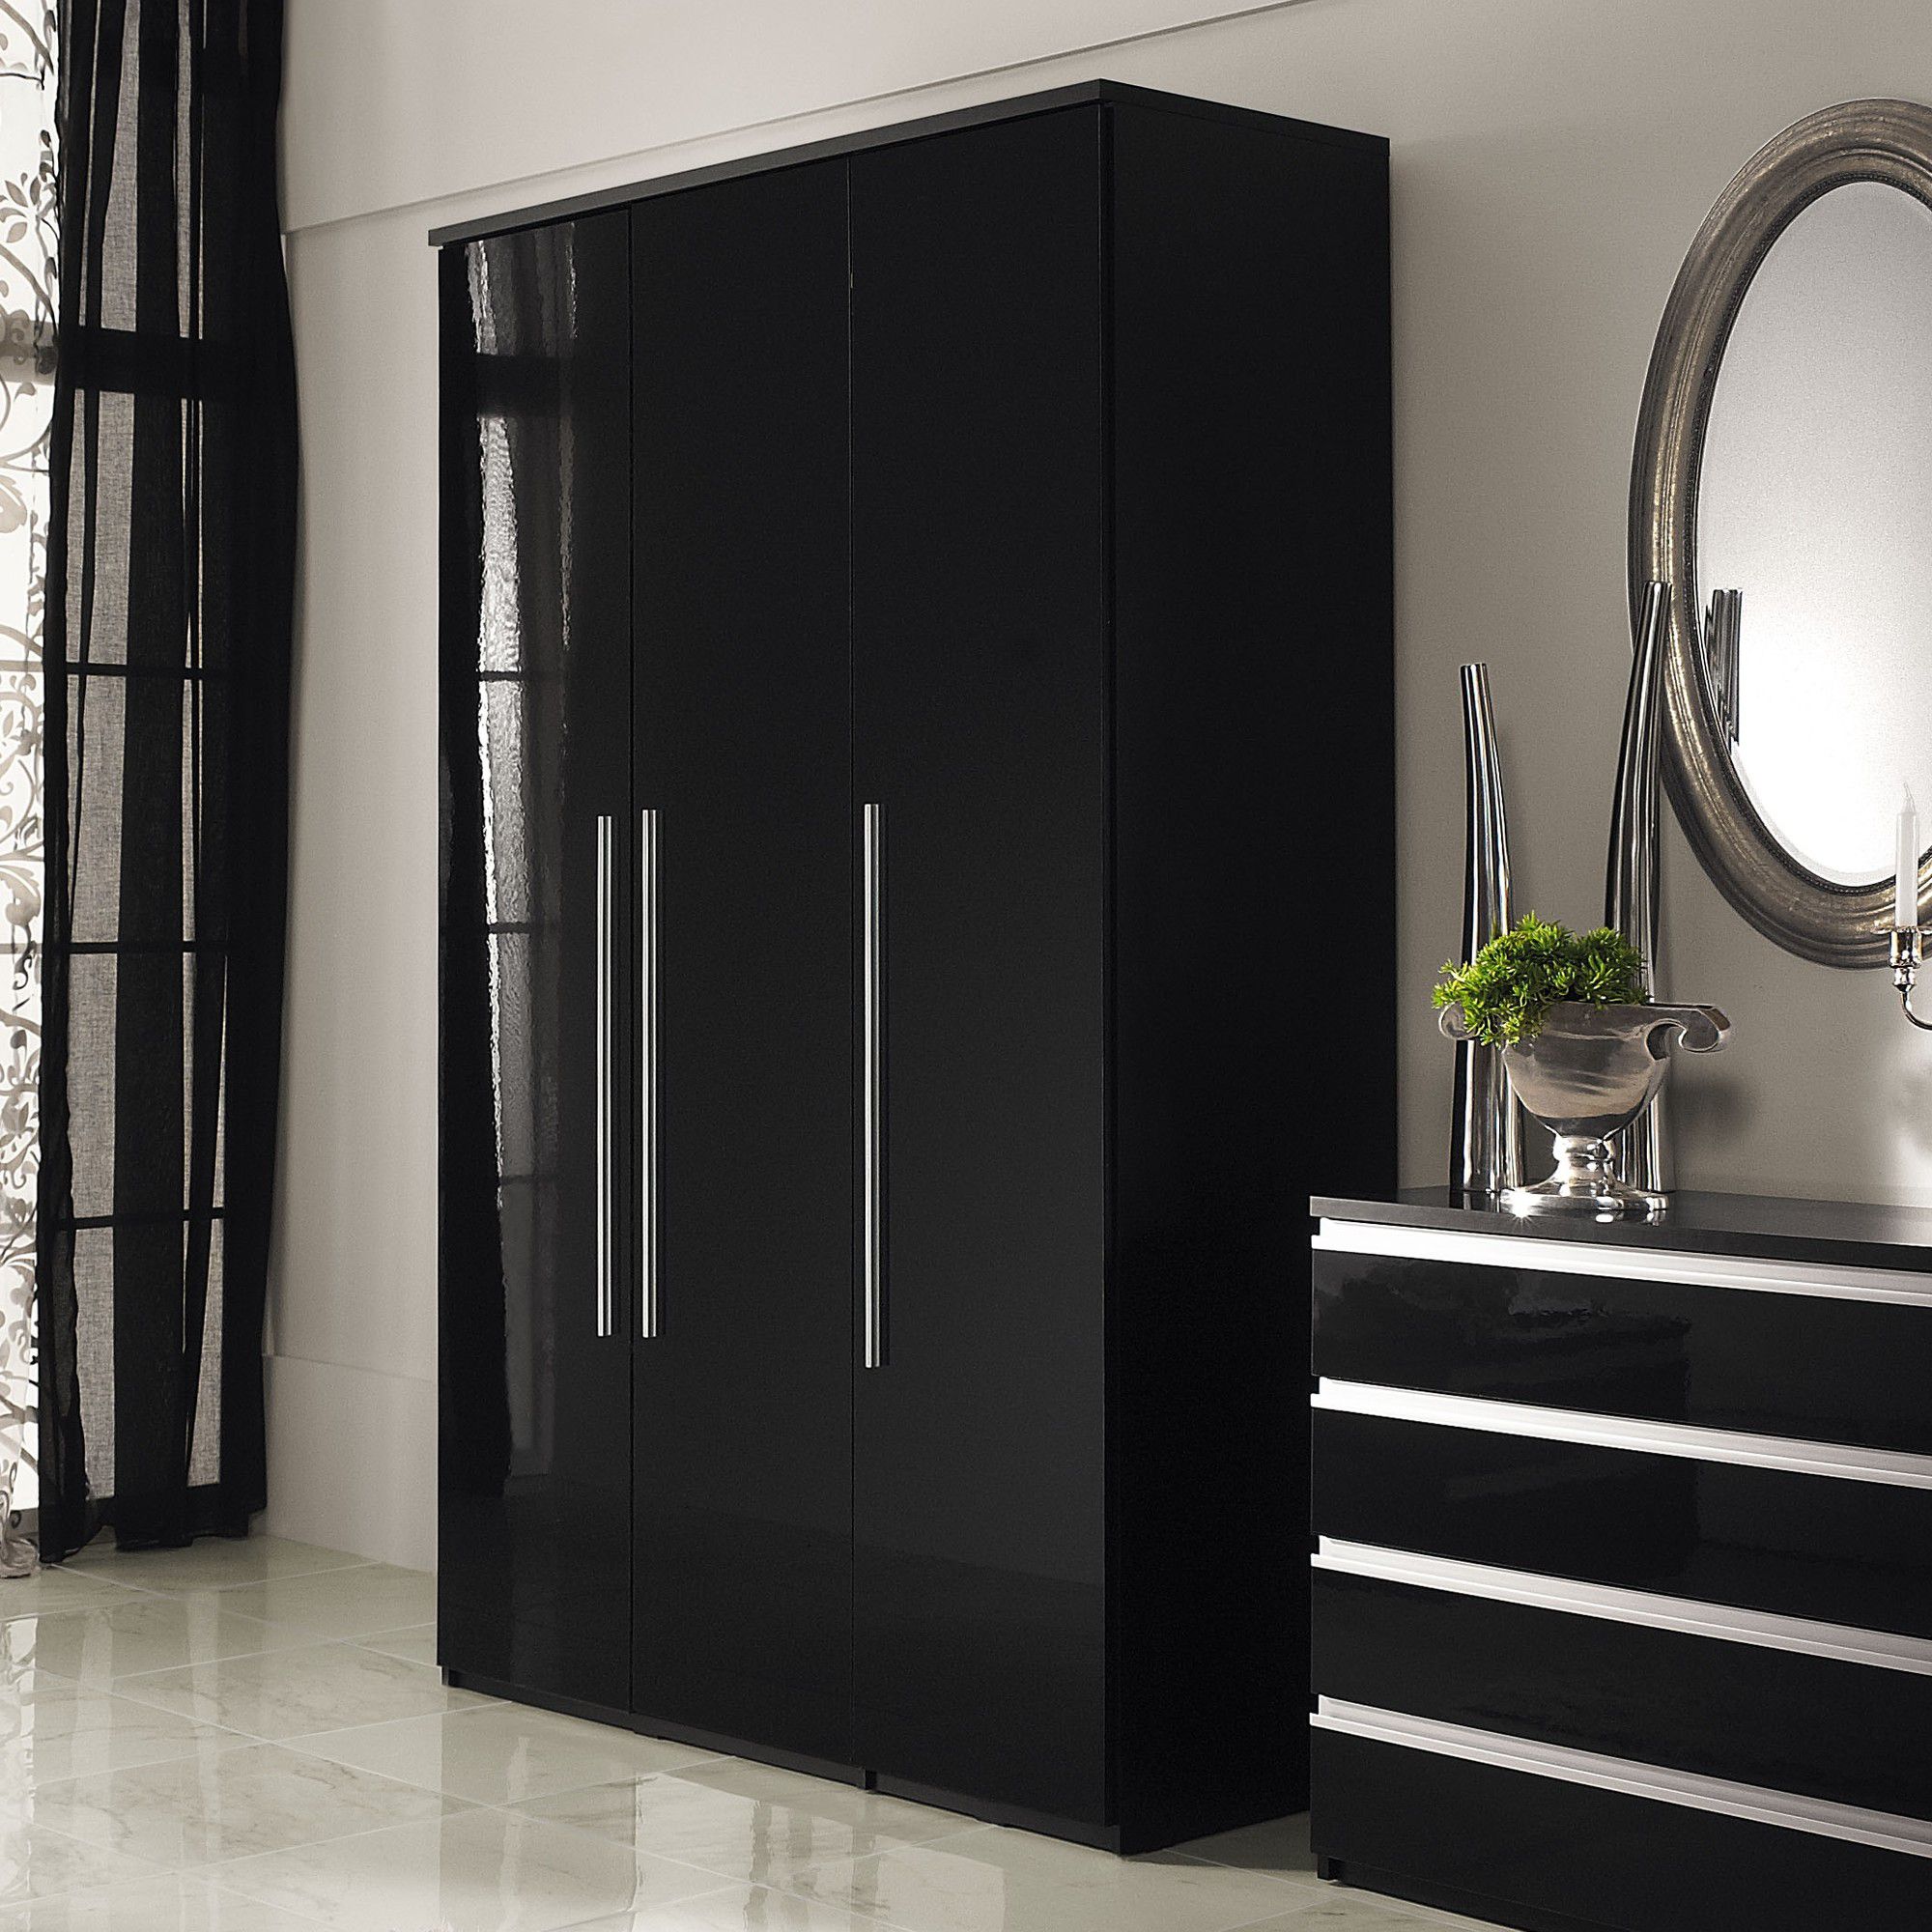 Urbane Designs Romain Three Door Wardrobe in Black and High Gloss Black at Tesco Direct